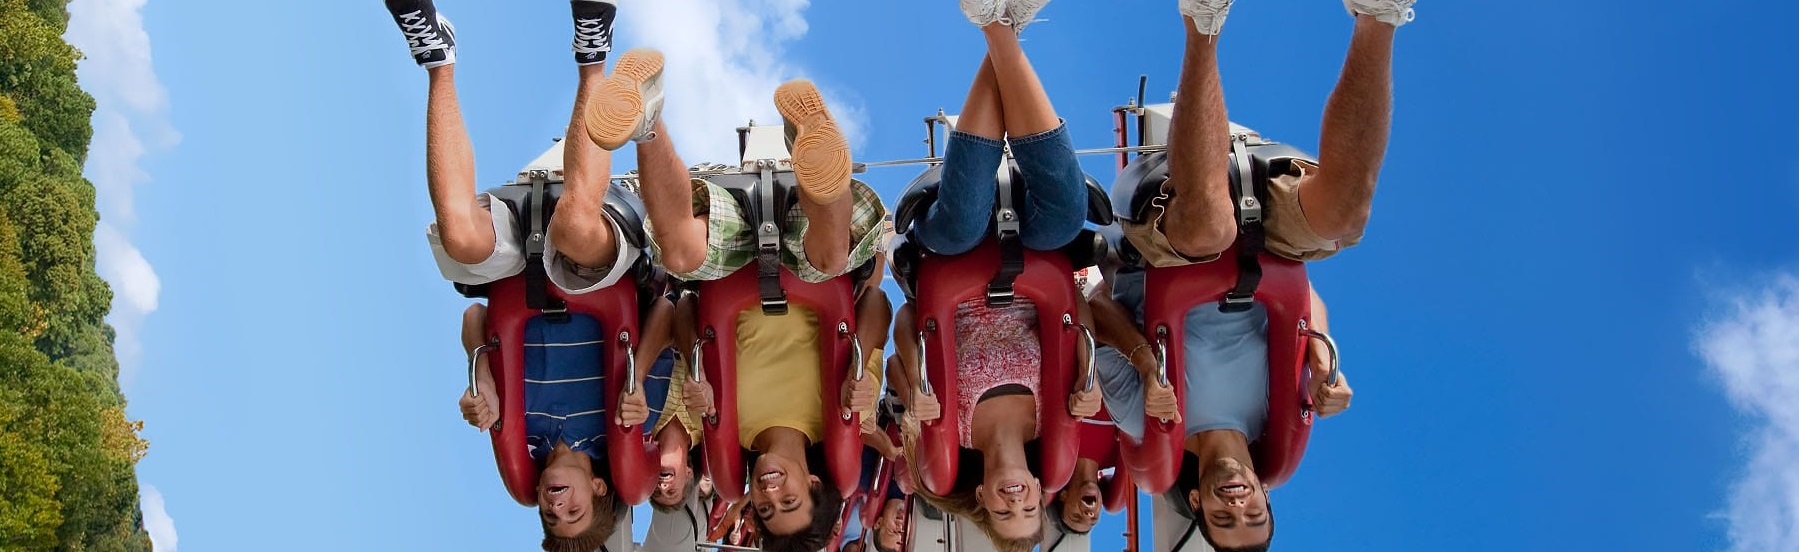 Roller Coaster at Busch Gardens